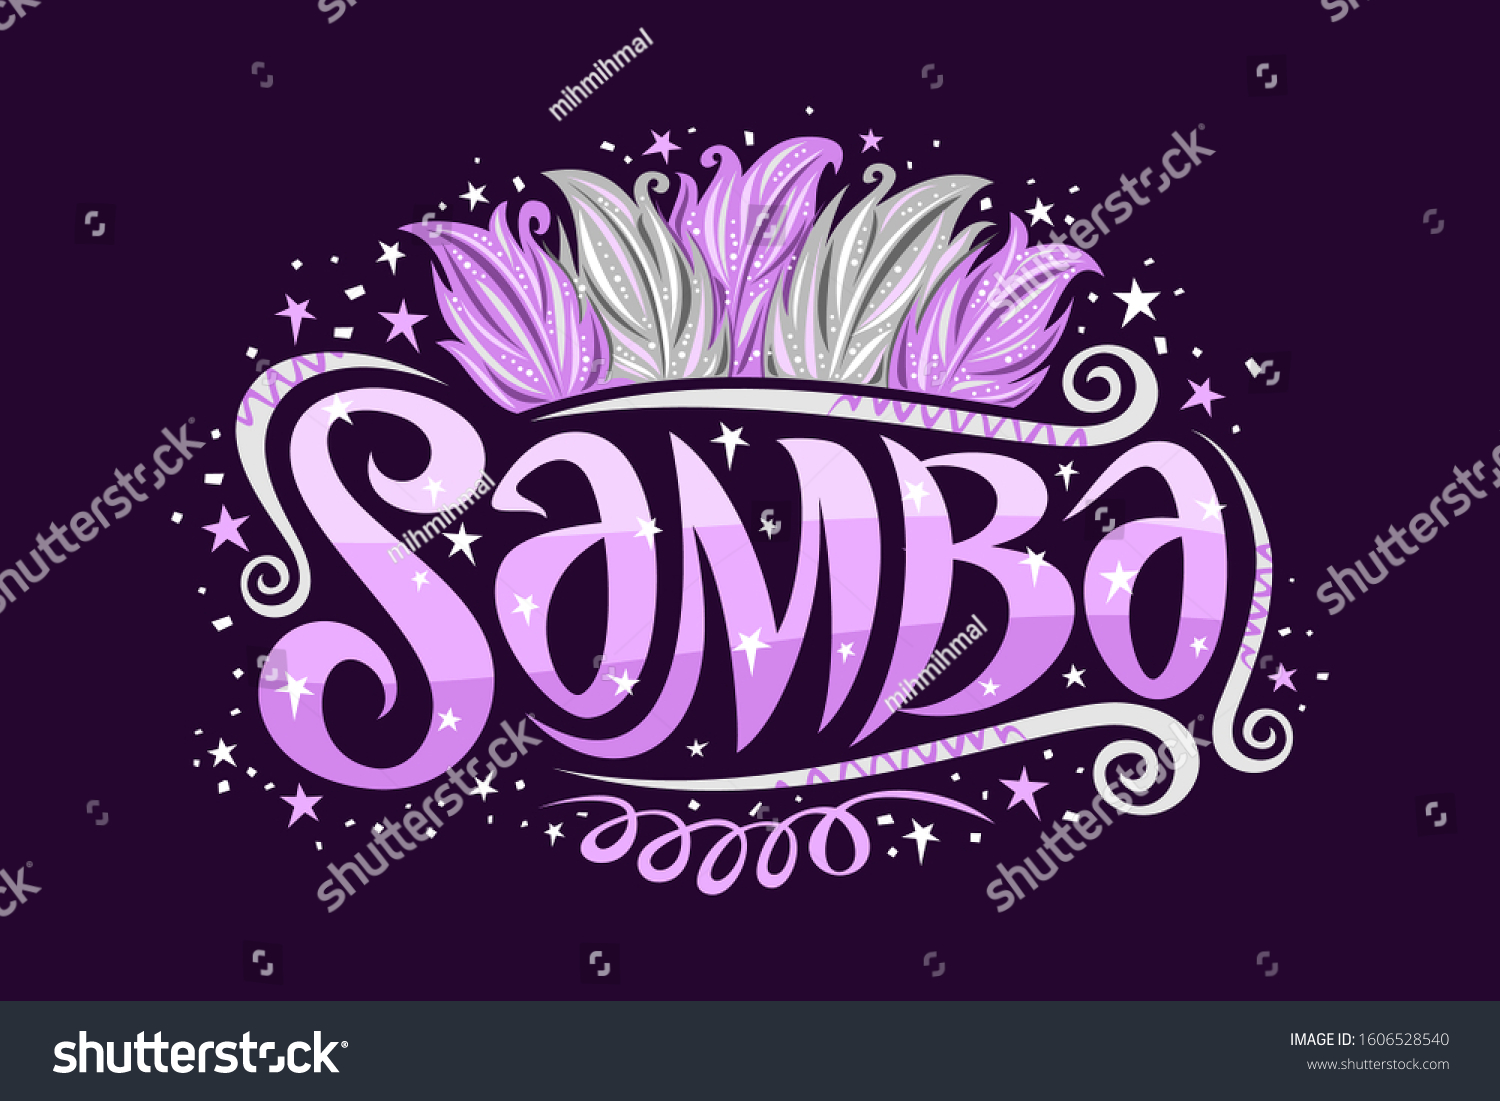 Vector logo for Brazilian Samba, decorative sign board for samba school with illustration of purple and silver bird feathers, curls and stars, original brush script for word samba on dark background. #1606528540